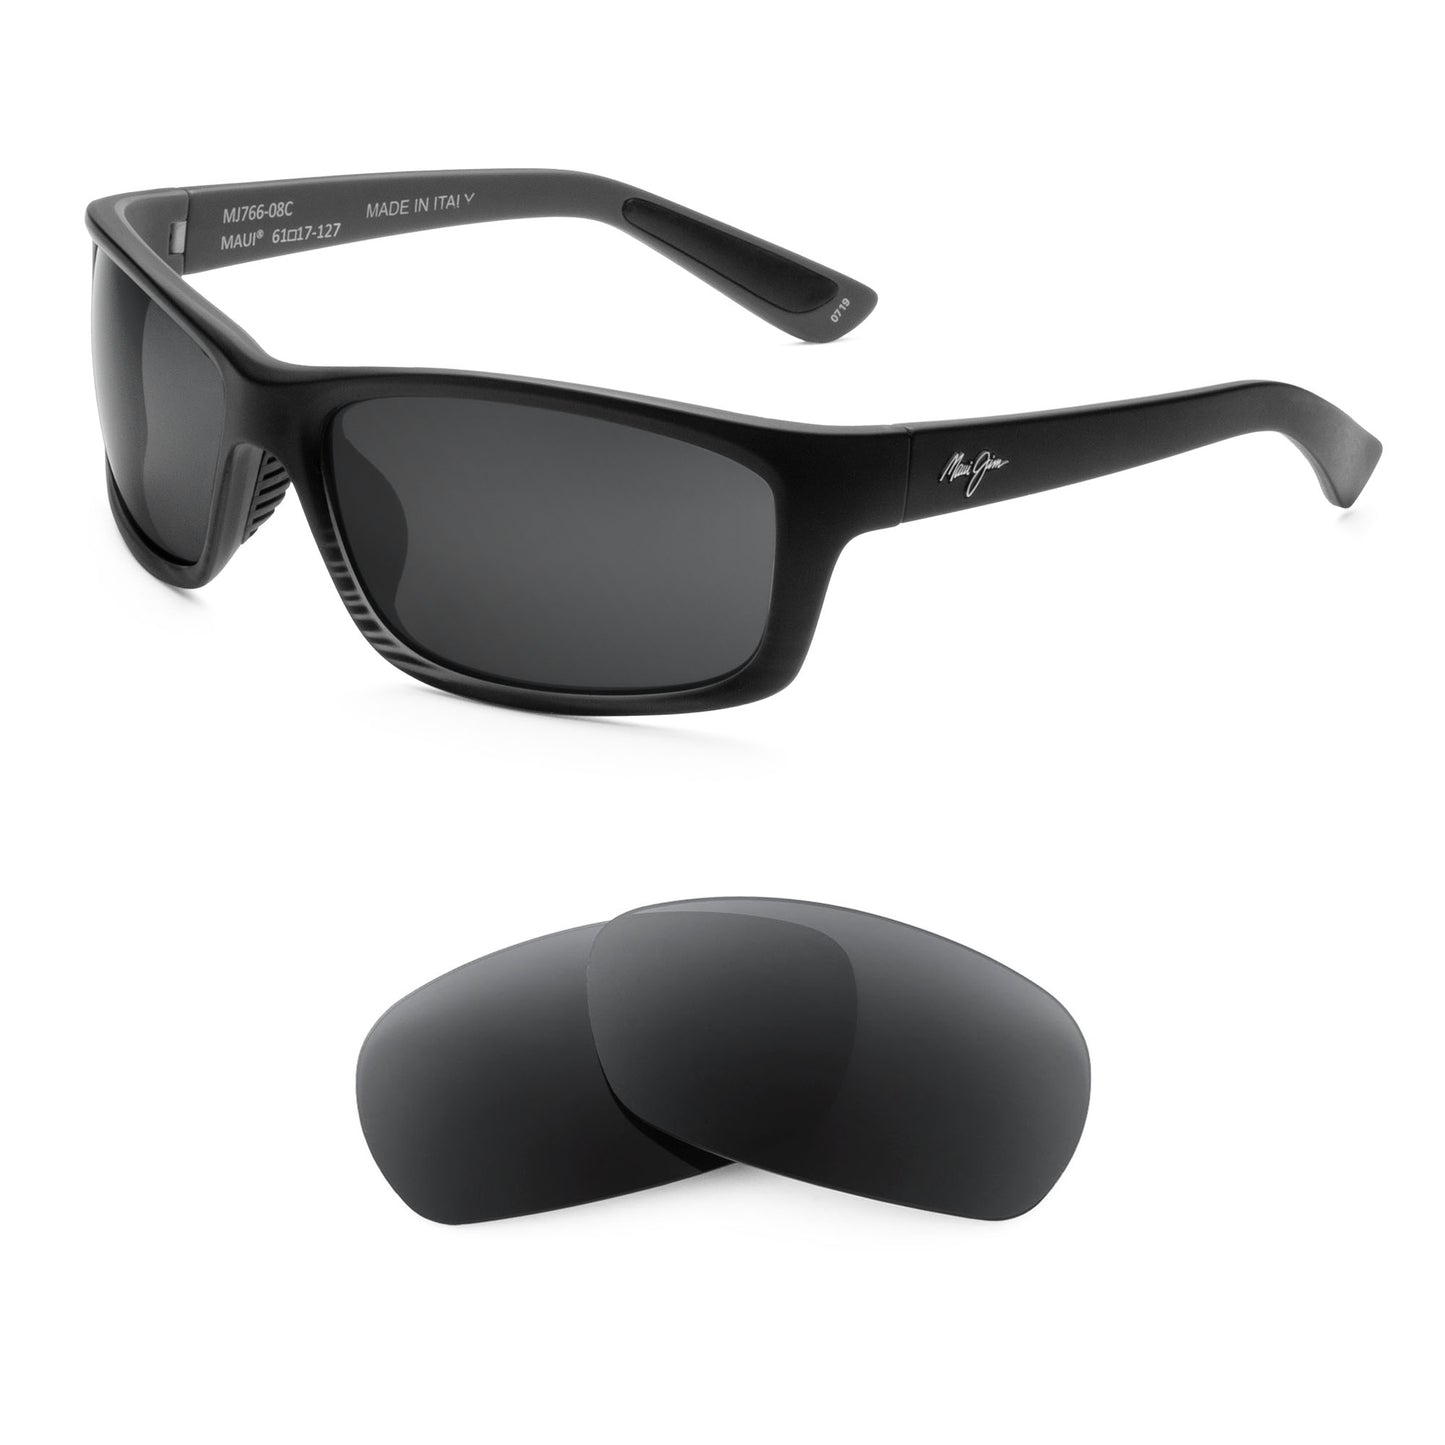 Maui Jim Kanaio Coast MJ766 sunglasses with replacement lenses